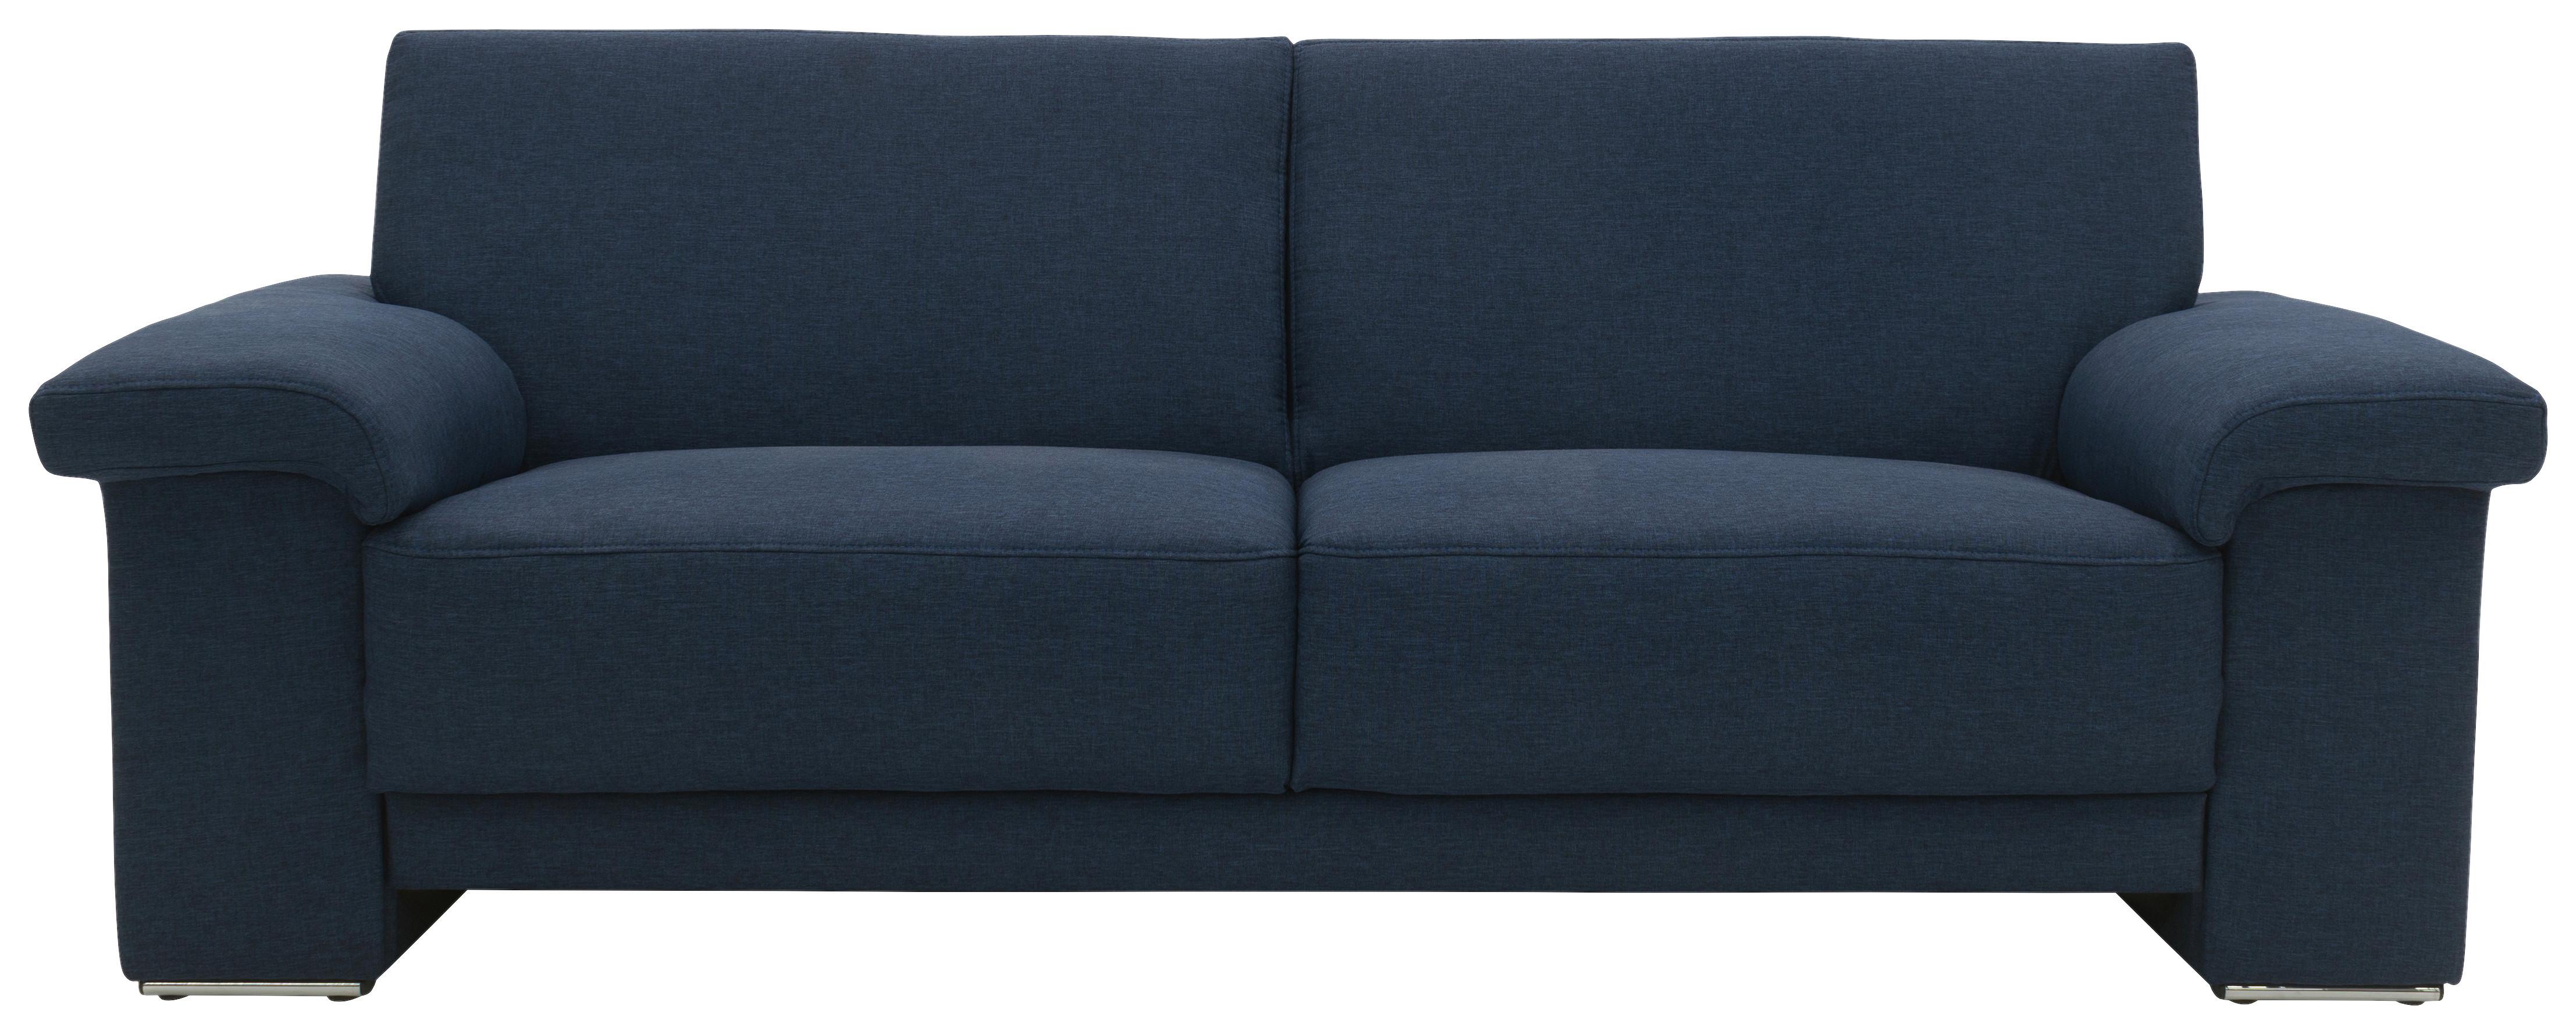 3-Sitzer-Sofa Arizona Armlehnen Dunkelblau - Chromfarben/Dunkelblau, KONVENTIONELL, Textil (214/84/91cm) - MID.YOU